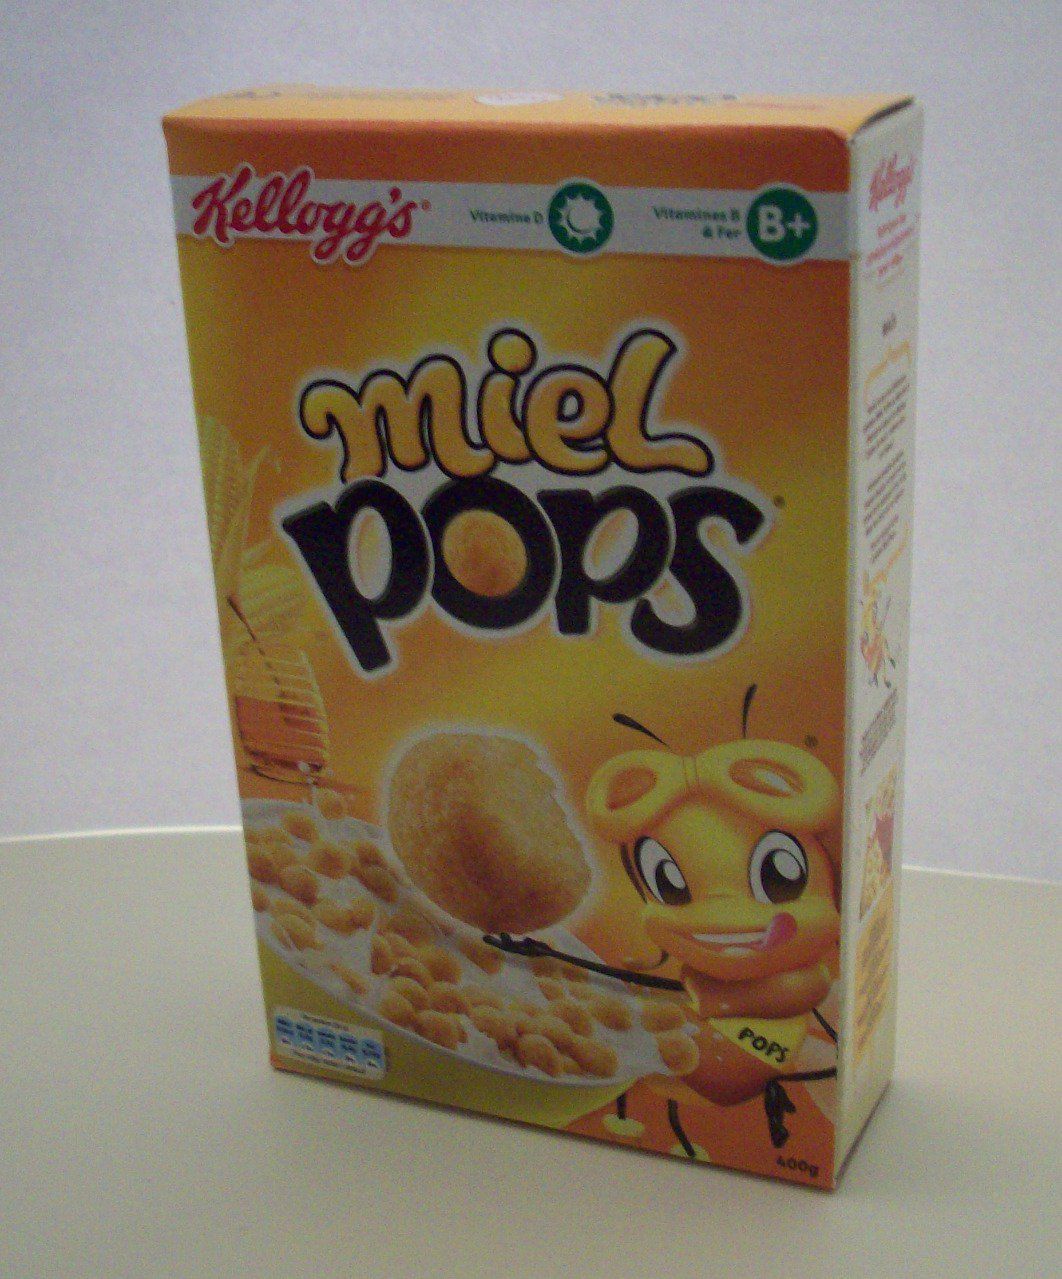 Boite de Kellogg's Miel Pops